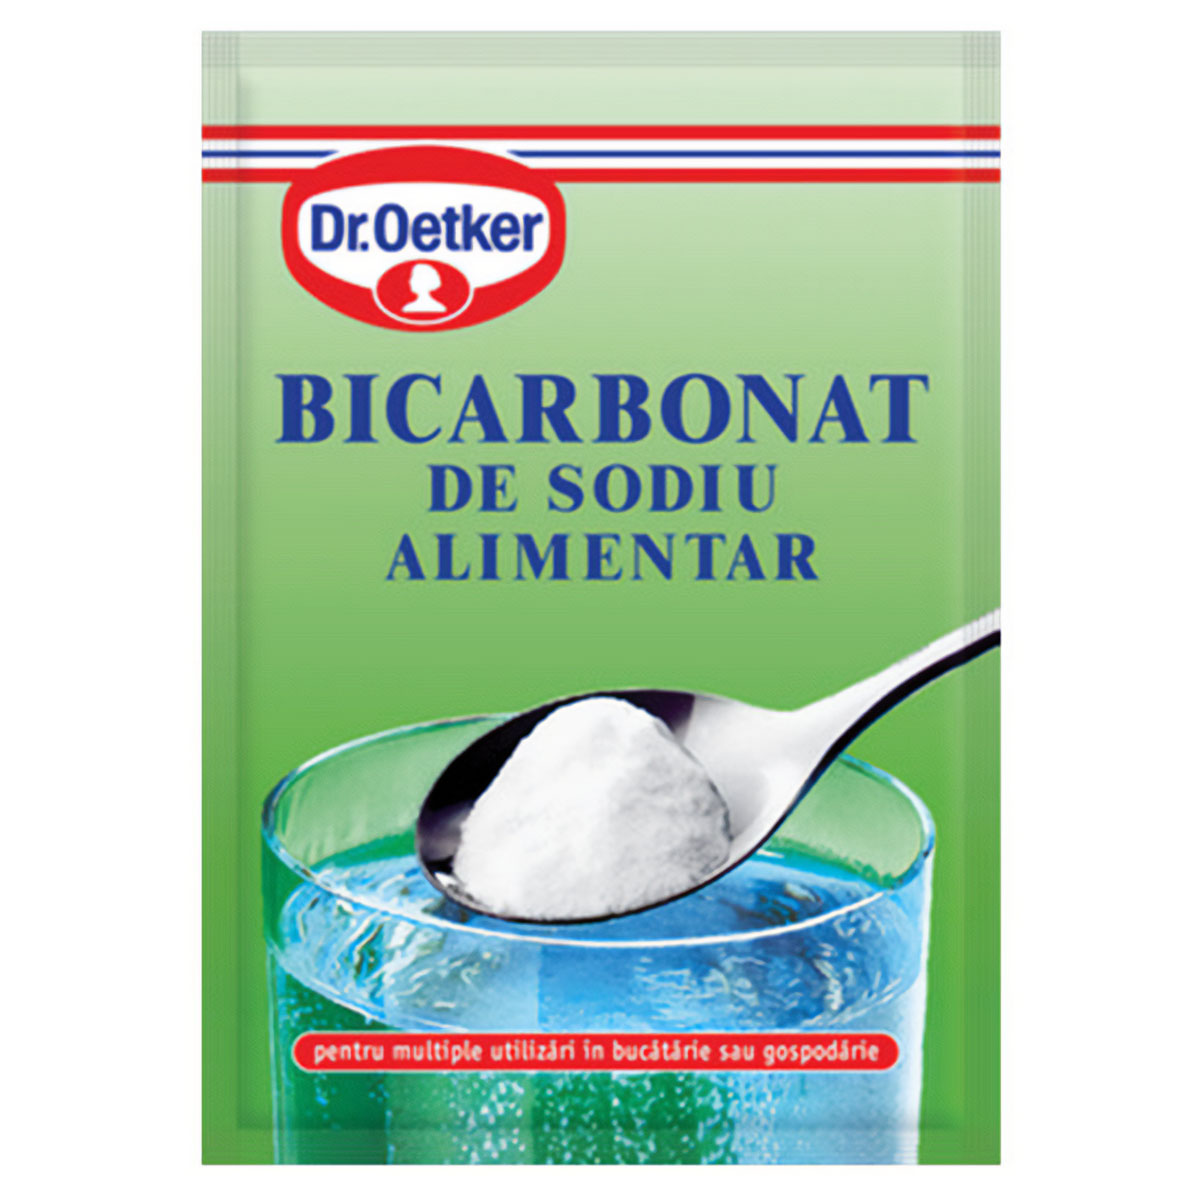 Dr.Oetker bicarbonate soda almentar.